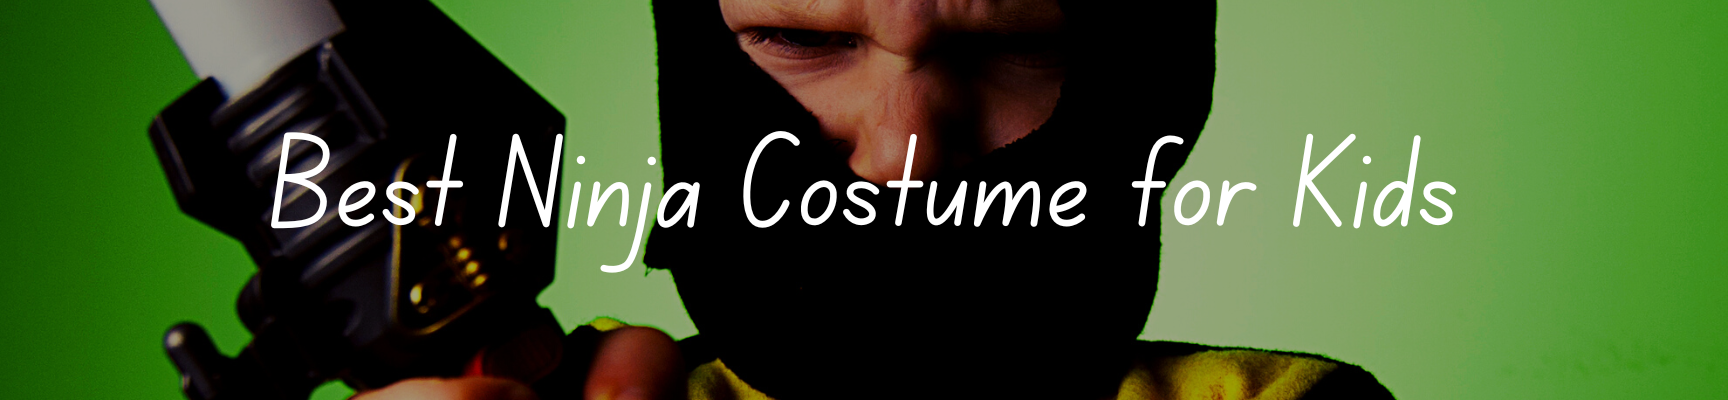 Best Ninja Costume for Kids